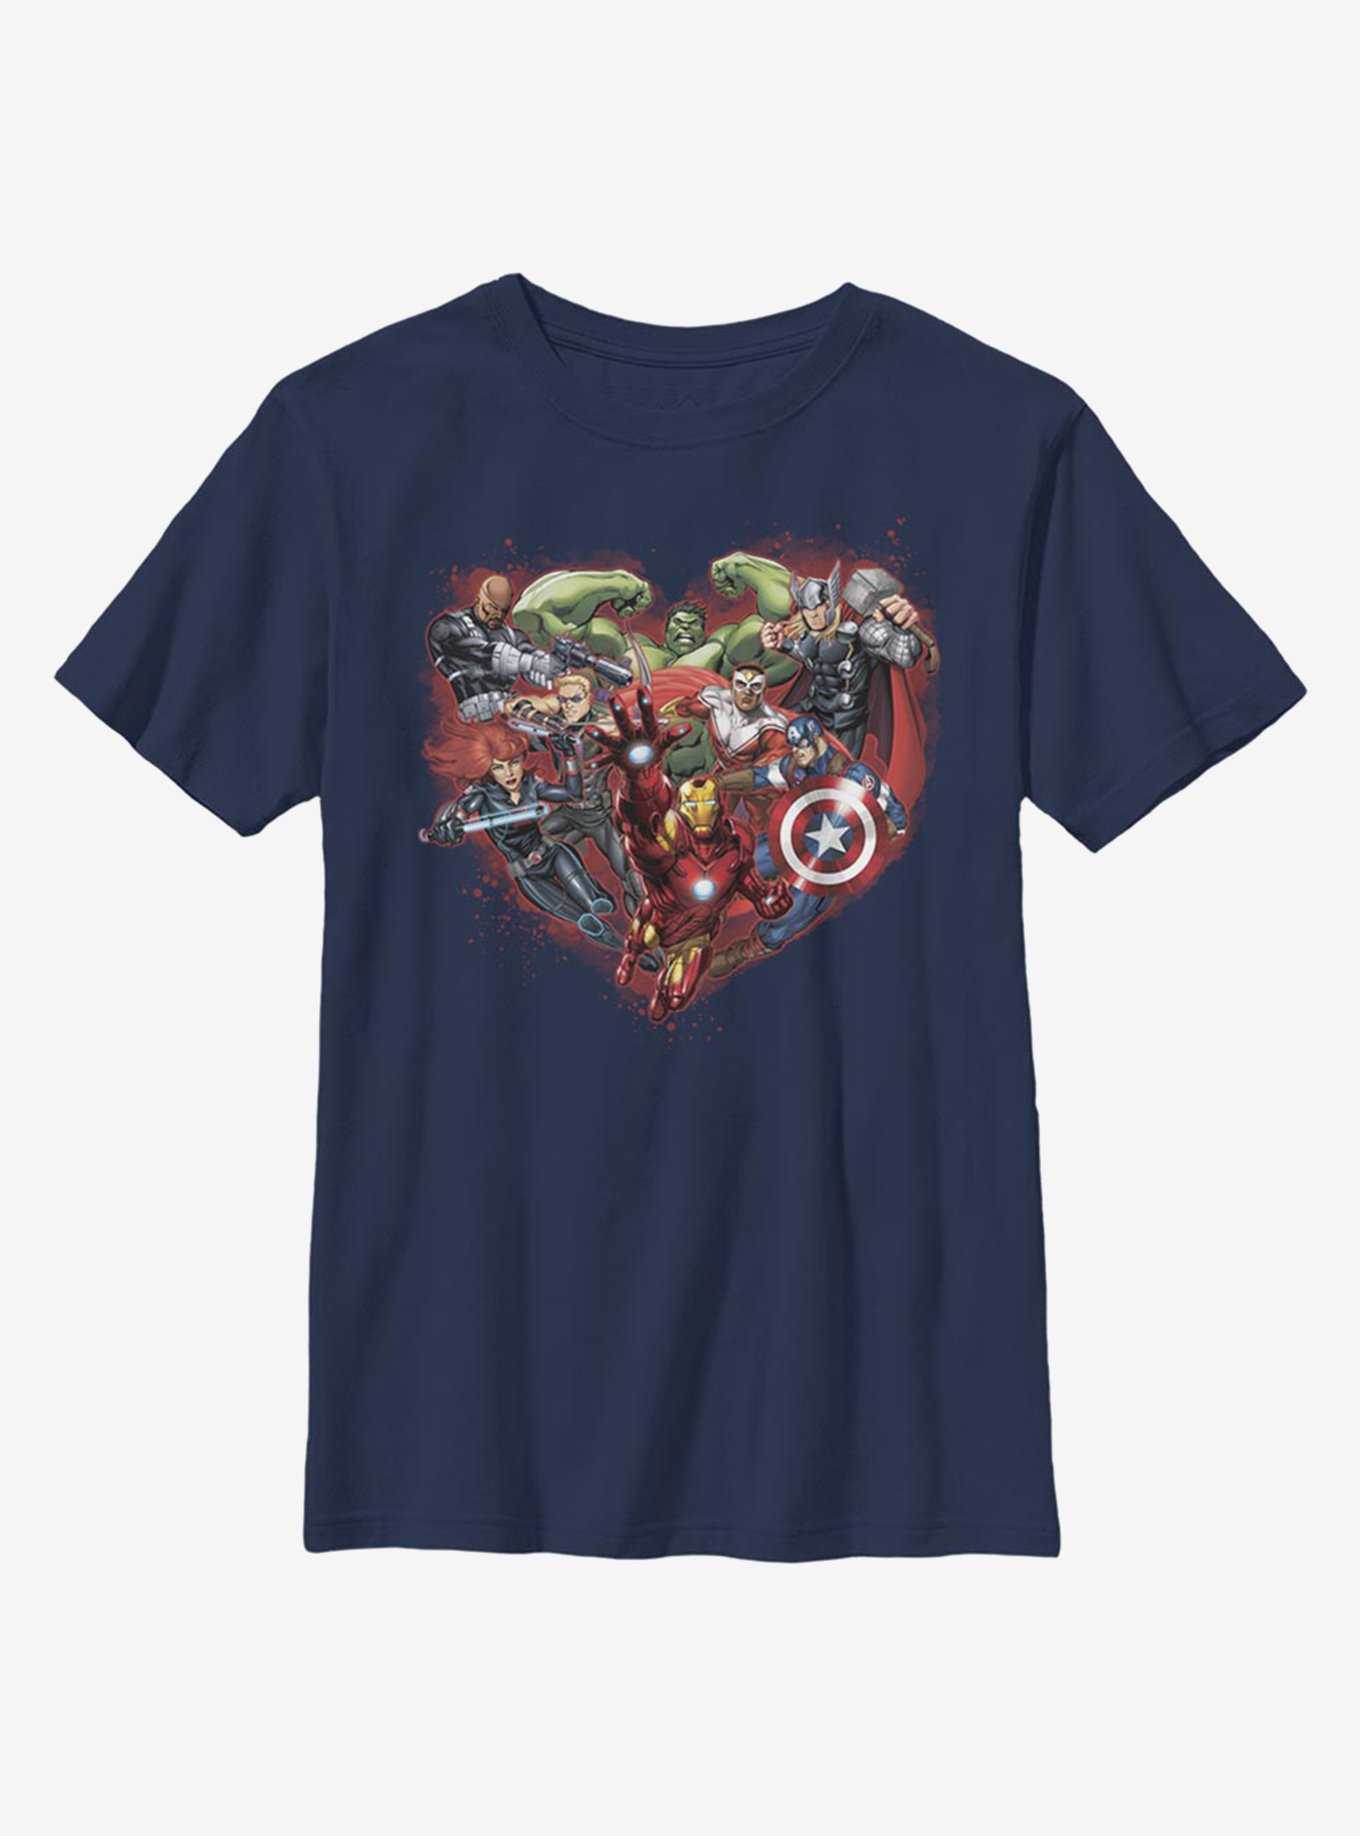 Her Merchandise & | Universe Avengers OFFICIAL Shirts